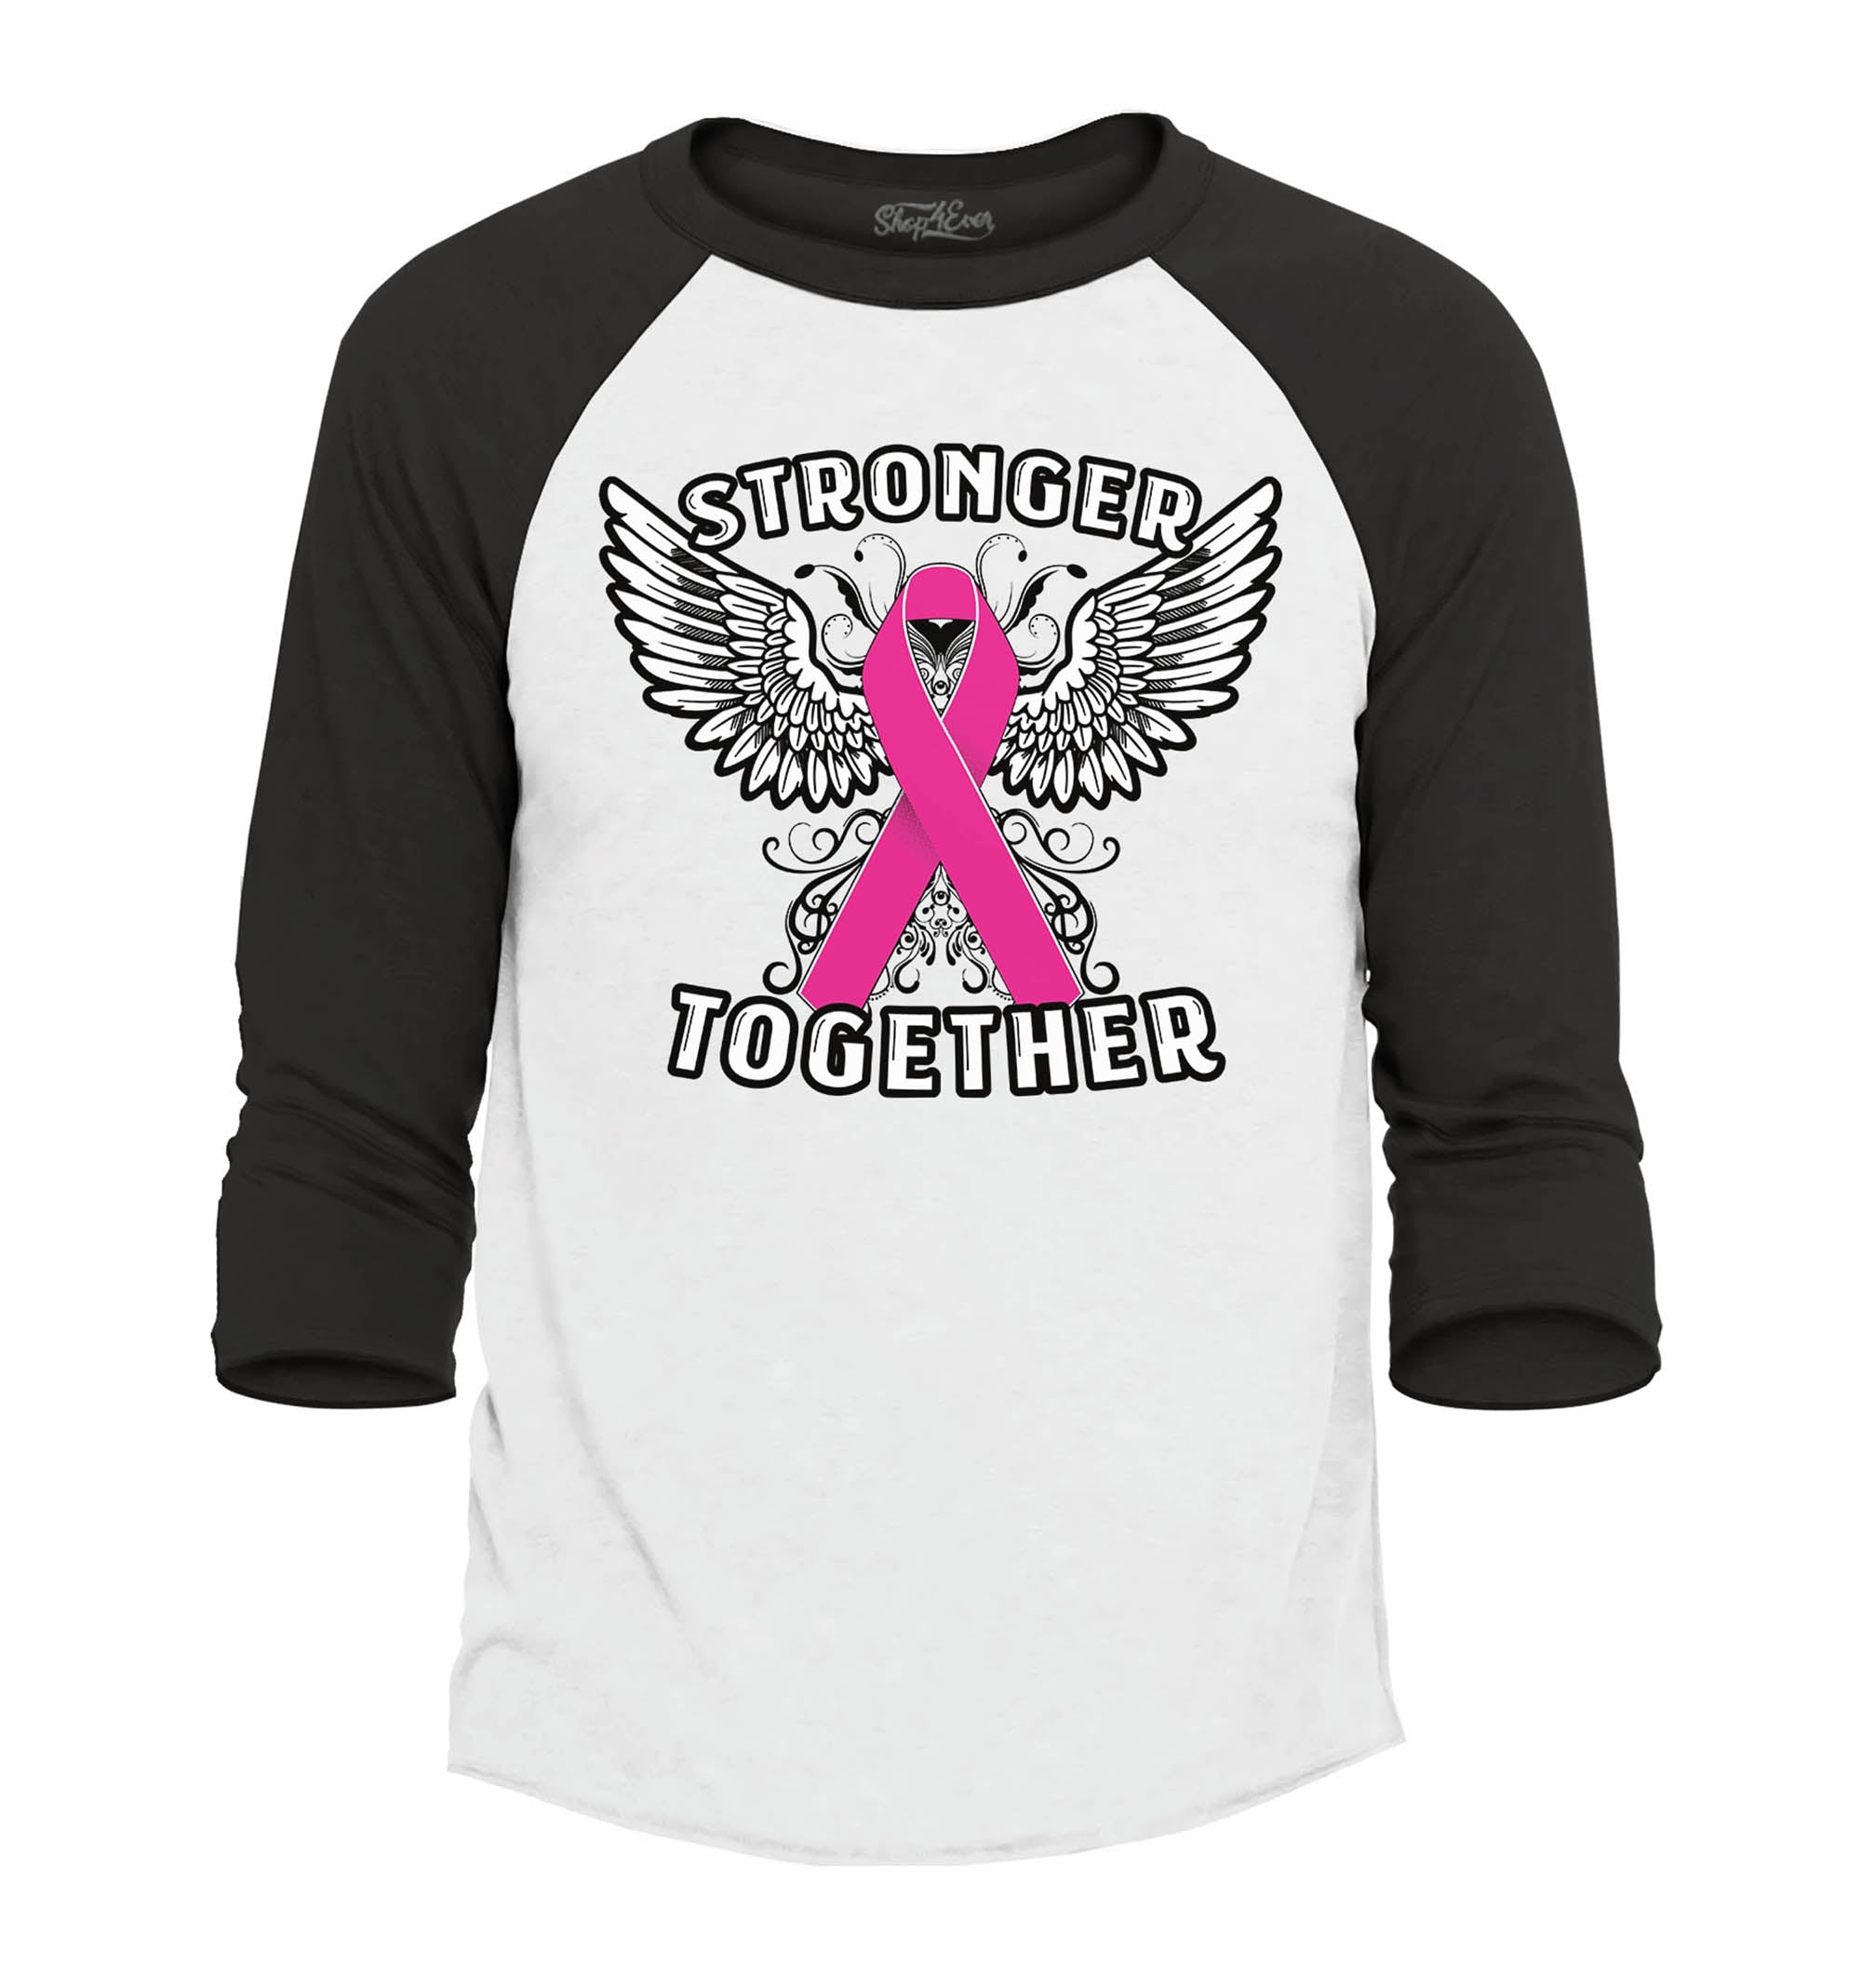 Stronger Together Breast Cancer Support Awareness Raglan Baseball Shirt